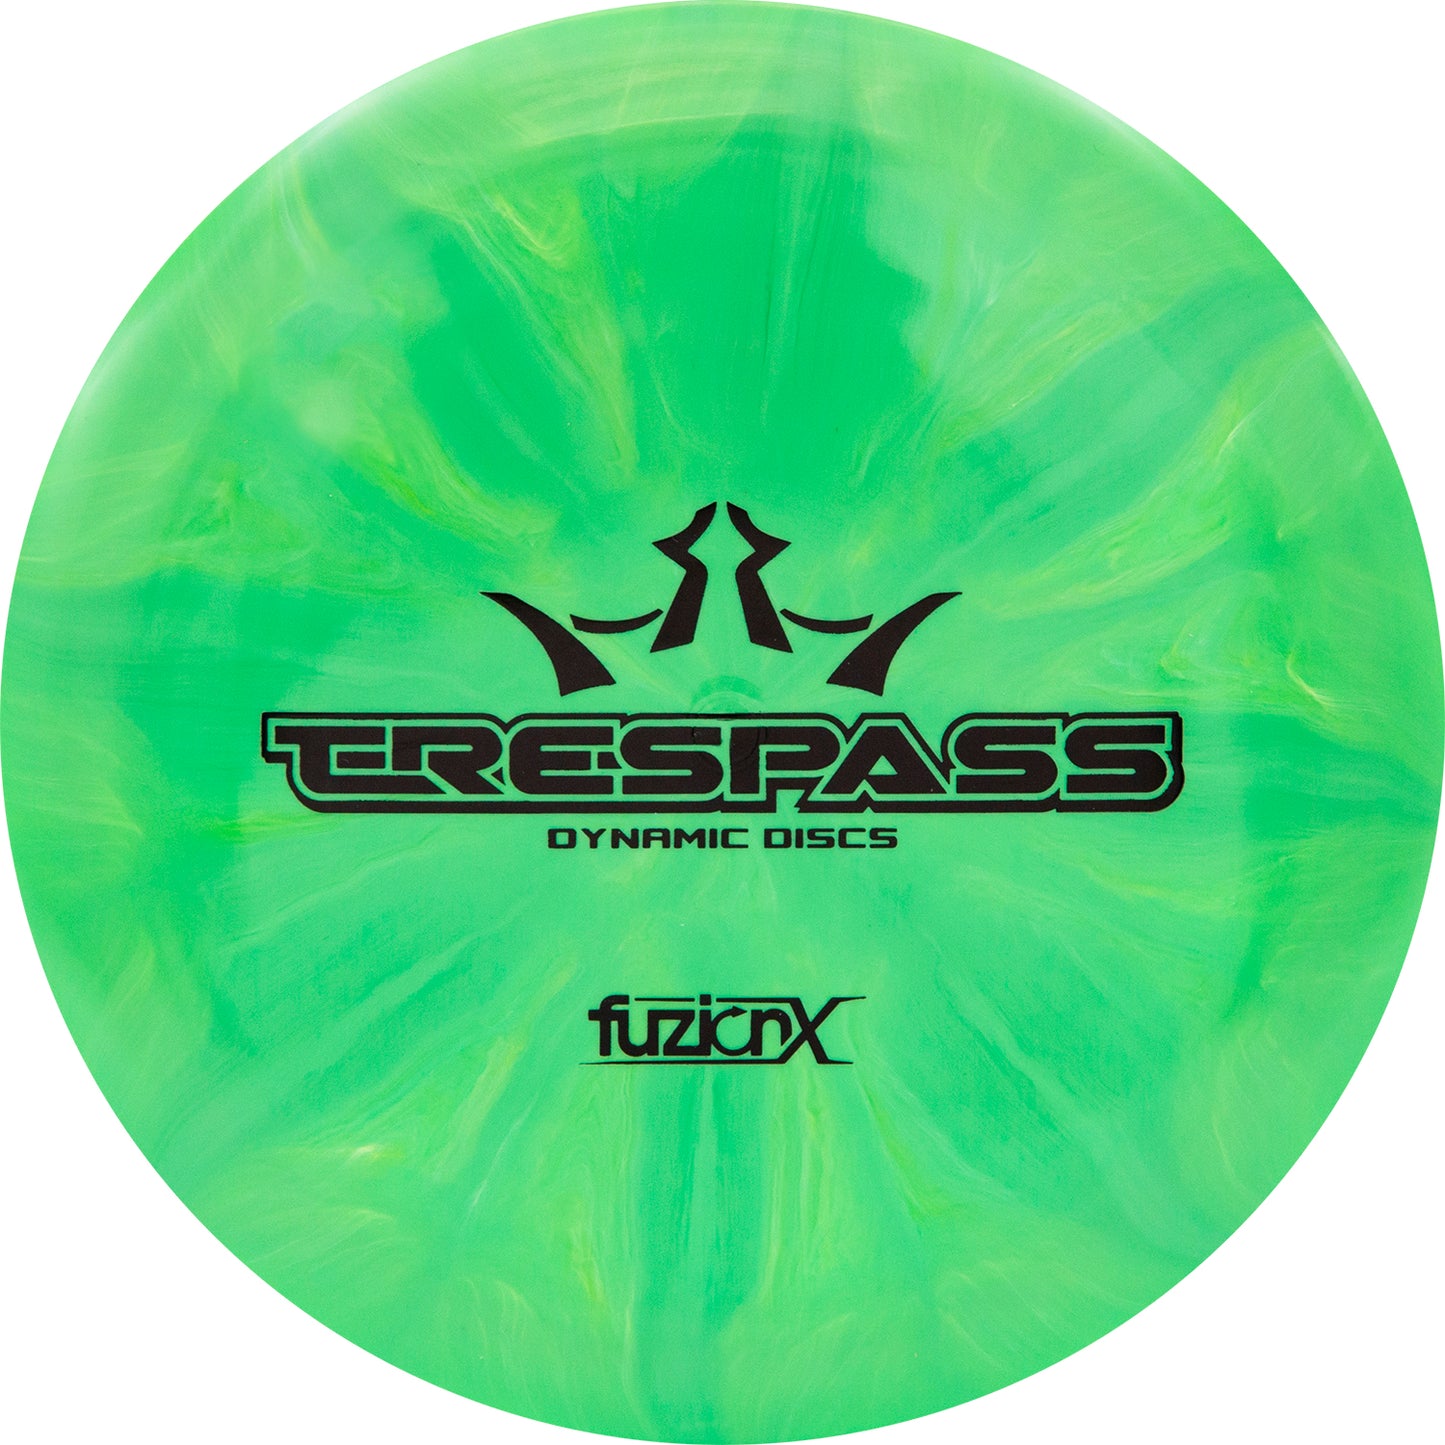 Dynamic Discs Fuzion-X Burst Trespass